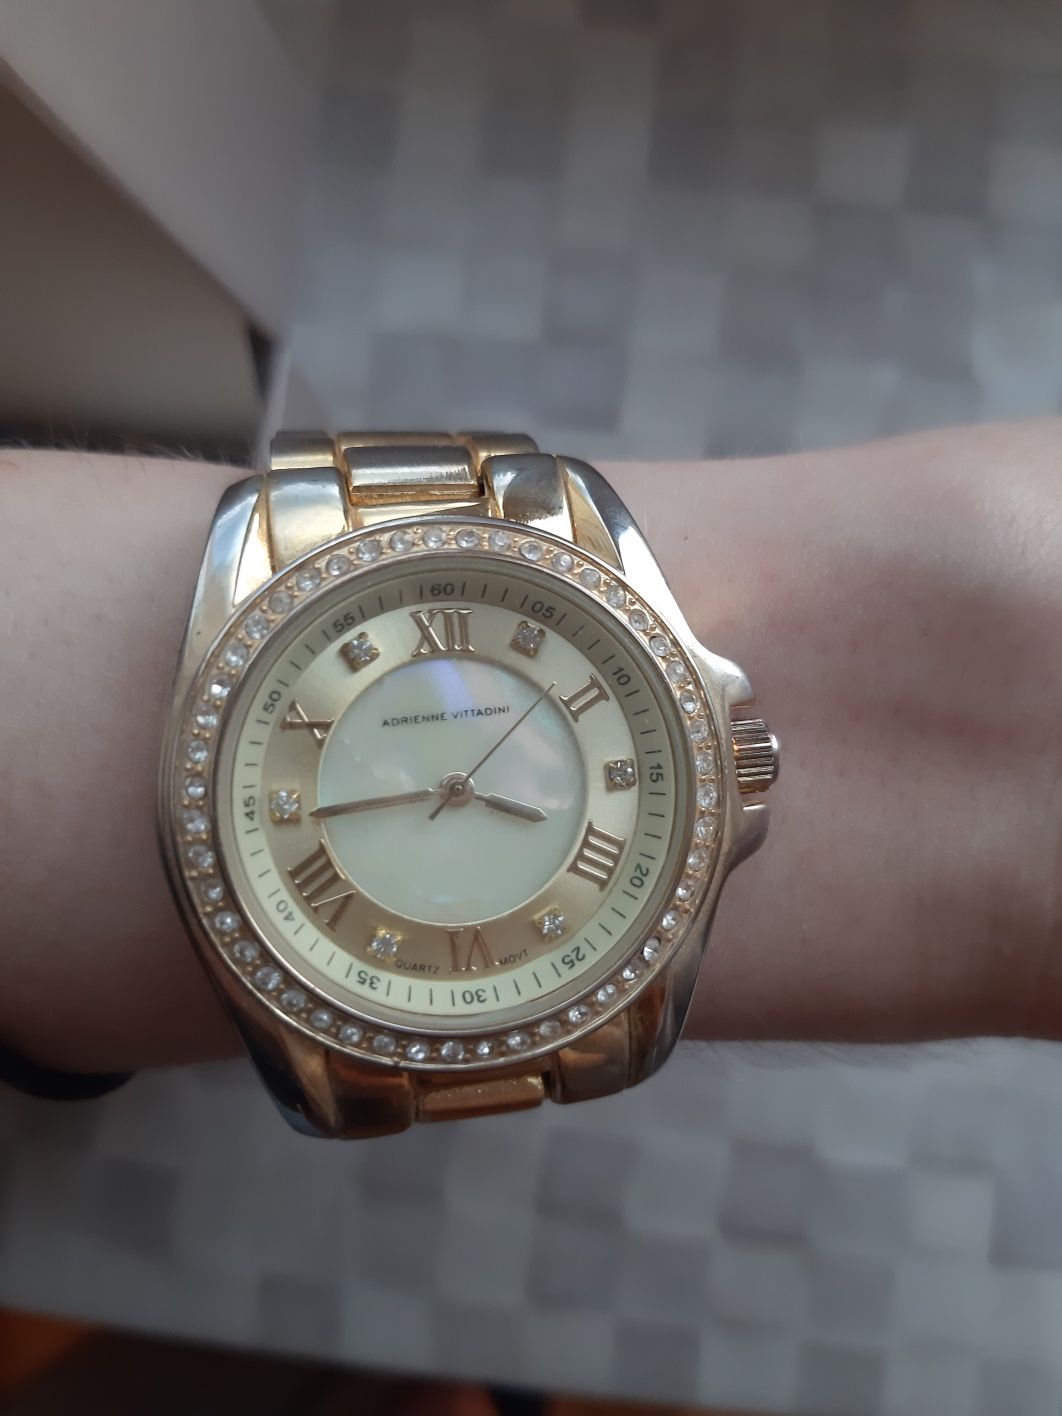 Жіночий годинник Аdrienne Vittadini часы женские